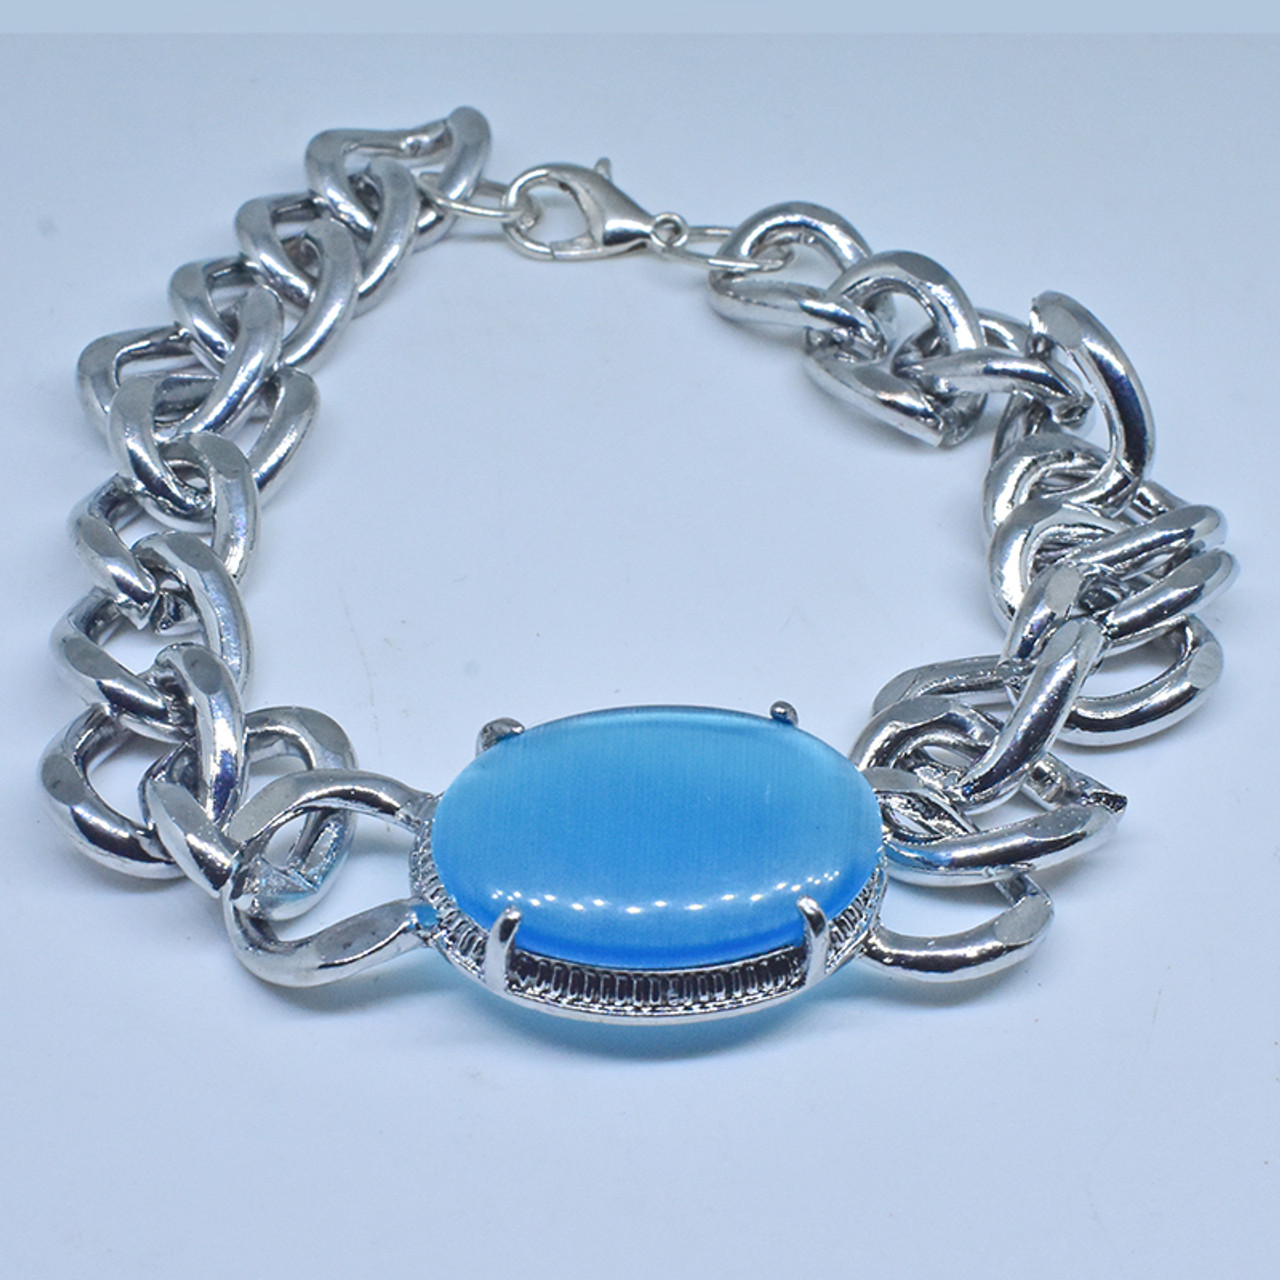 Firoza 925 Silver Bracelet , Turquoise, Salman Khan at Rs 4500/piece | खरे  चांदी का कंगन in Jaipur | ID: 2852583830433